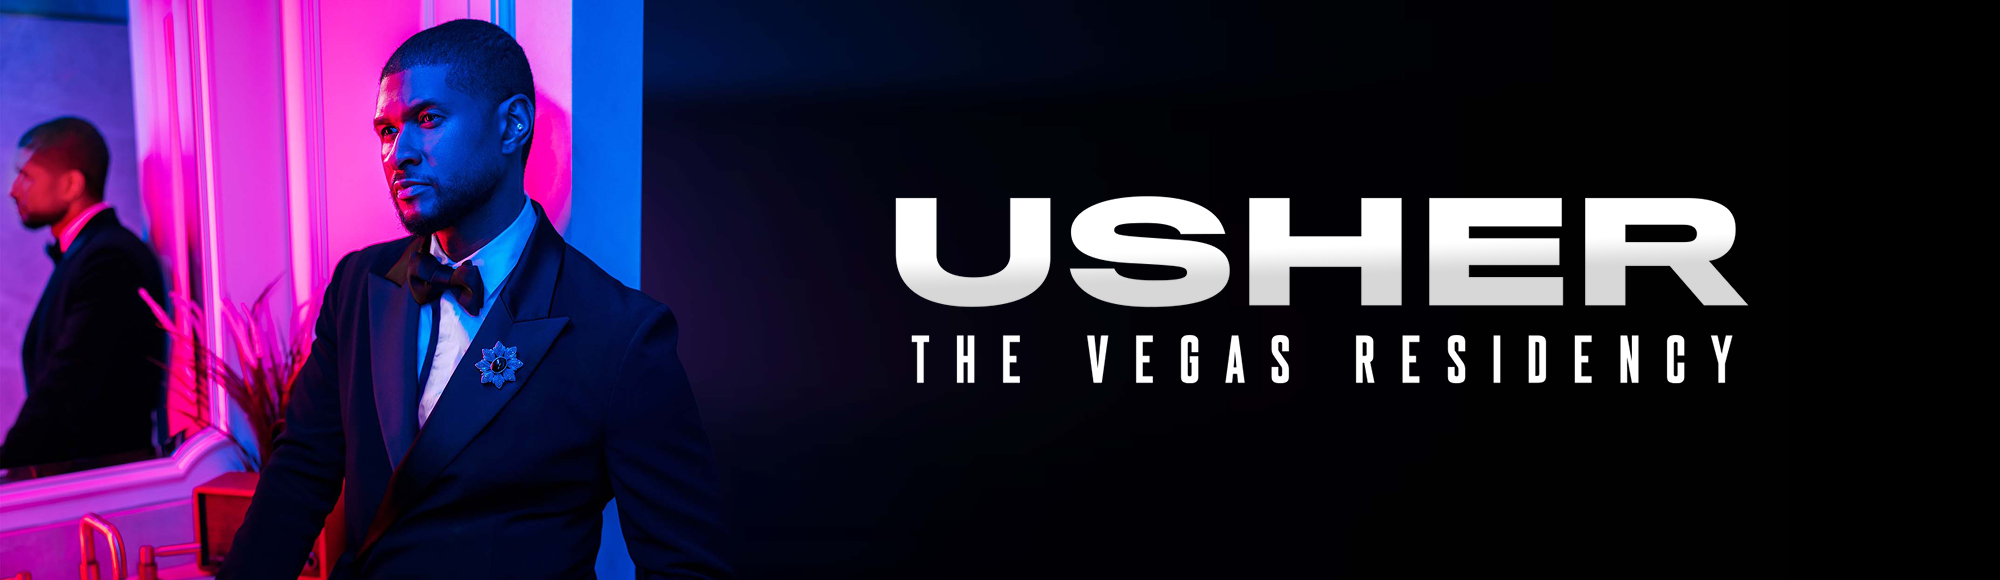 Usher The Vegas Residency Show Las Vegas Tickets & Reviews